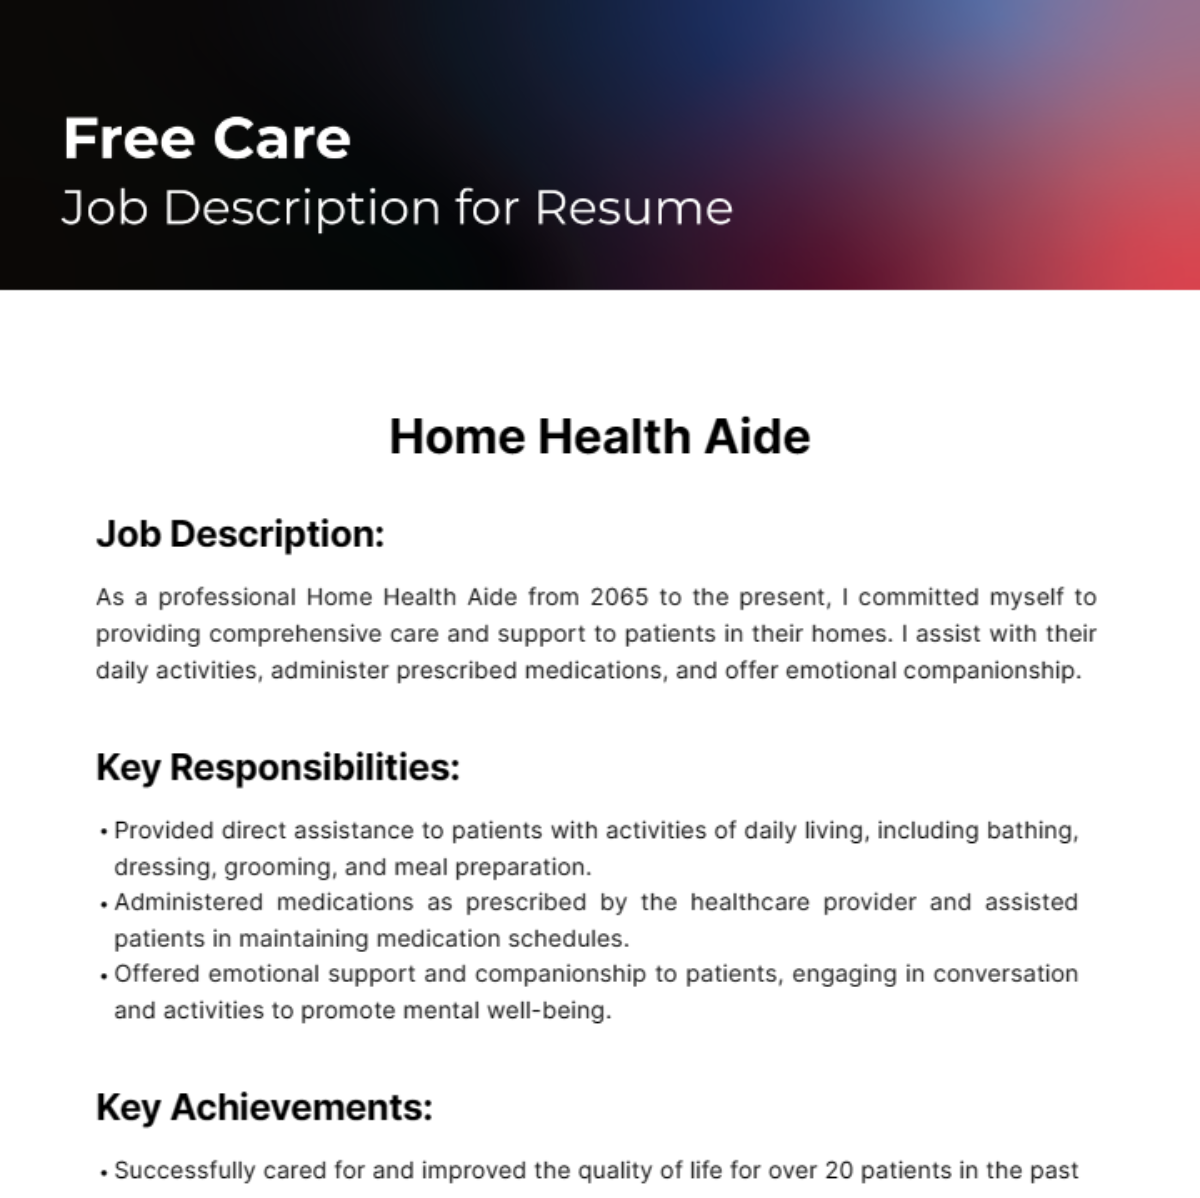 Free Care Job Description for Resume Template